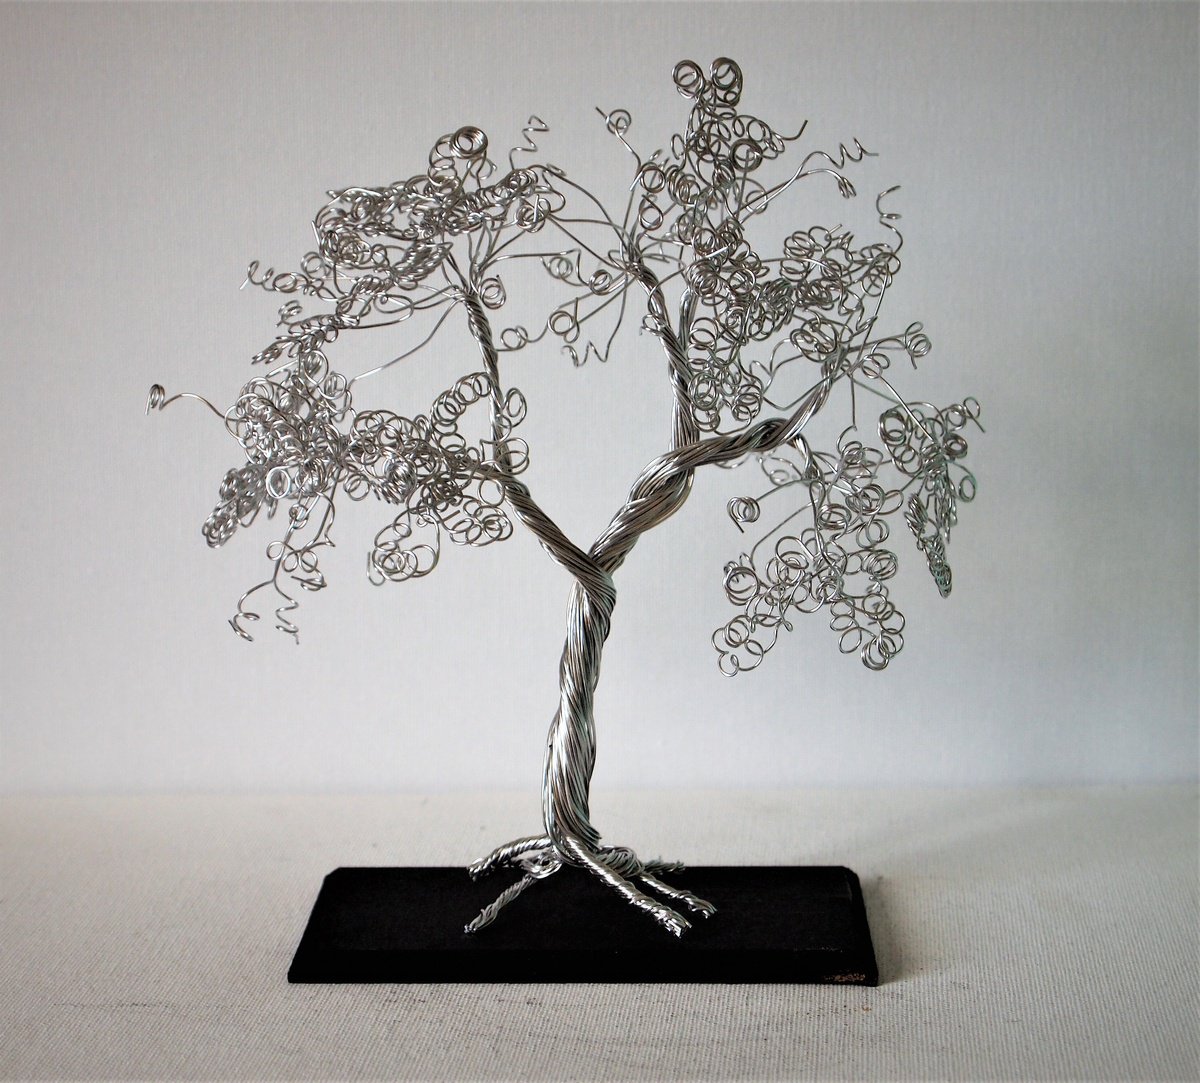 Silver tree, small, delicate 1# by Steph Morgan